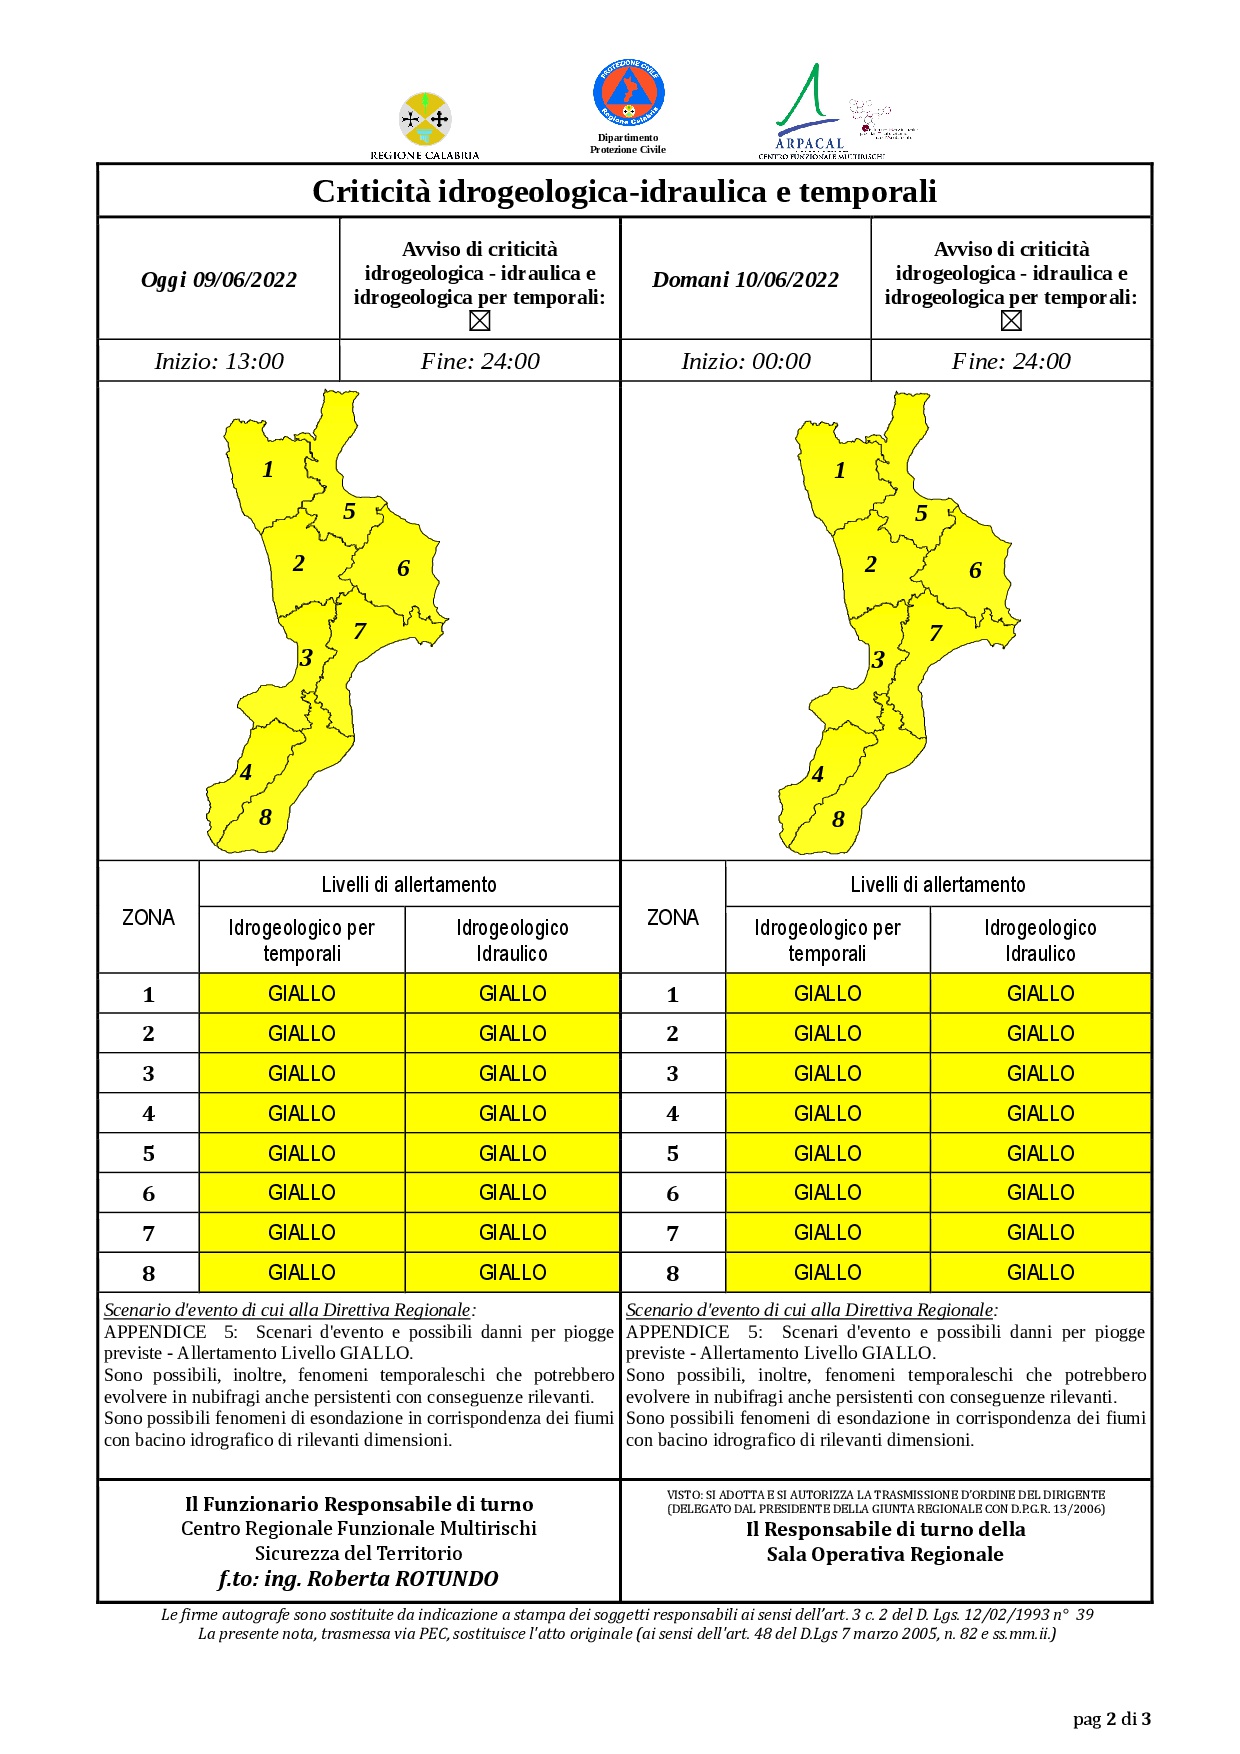 Criticità idrogeologica-idraulica e temporali in Calabria 09-06-2022